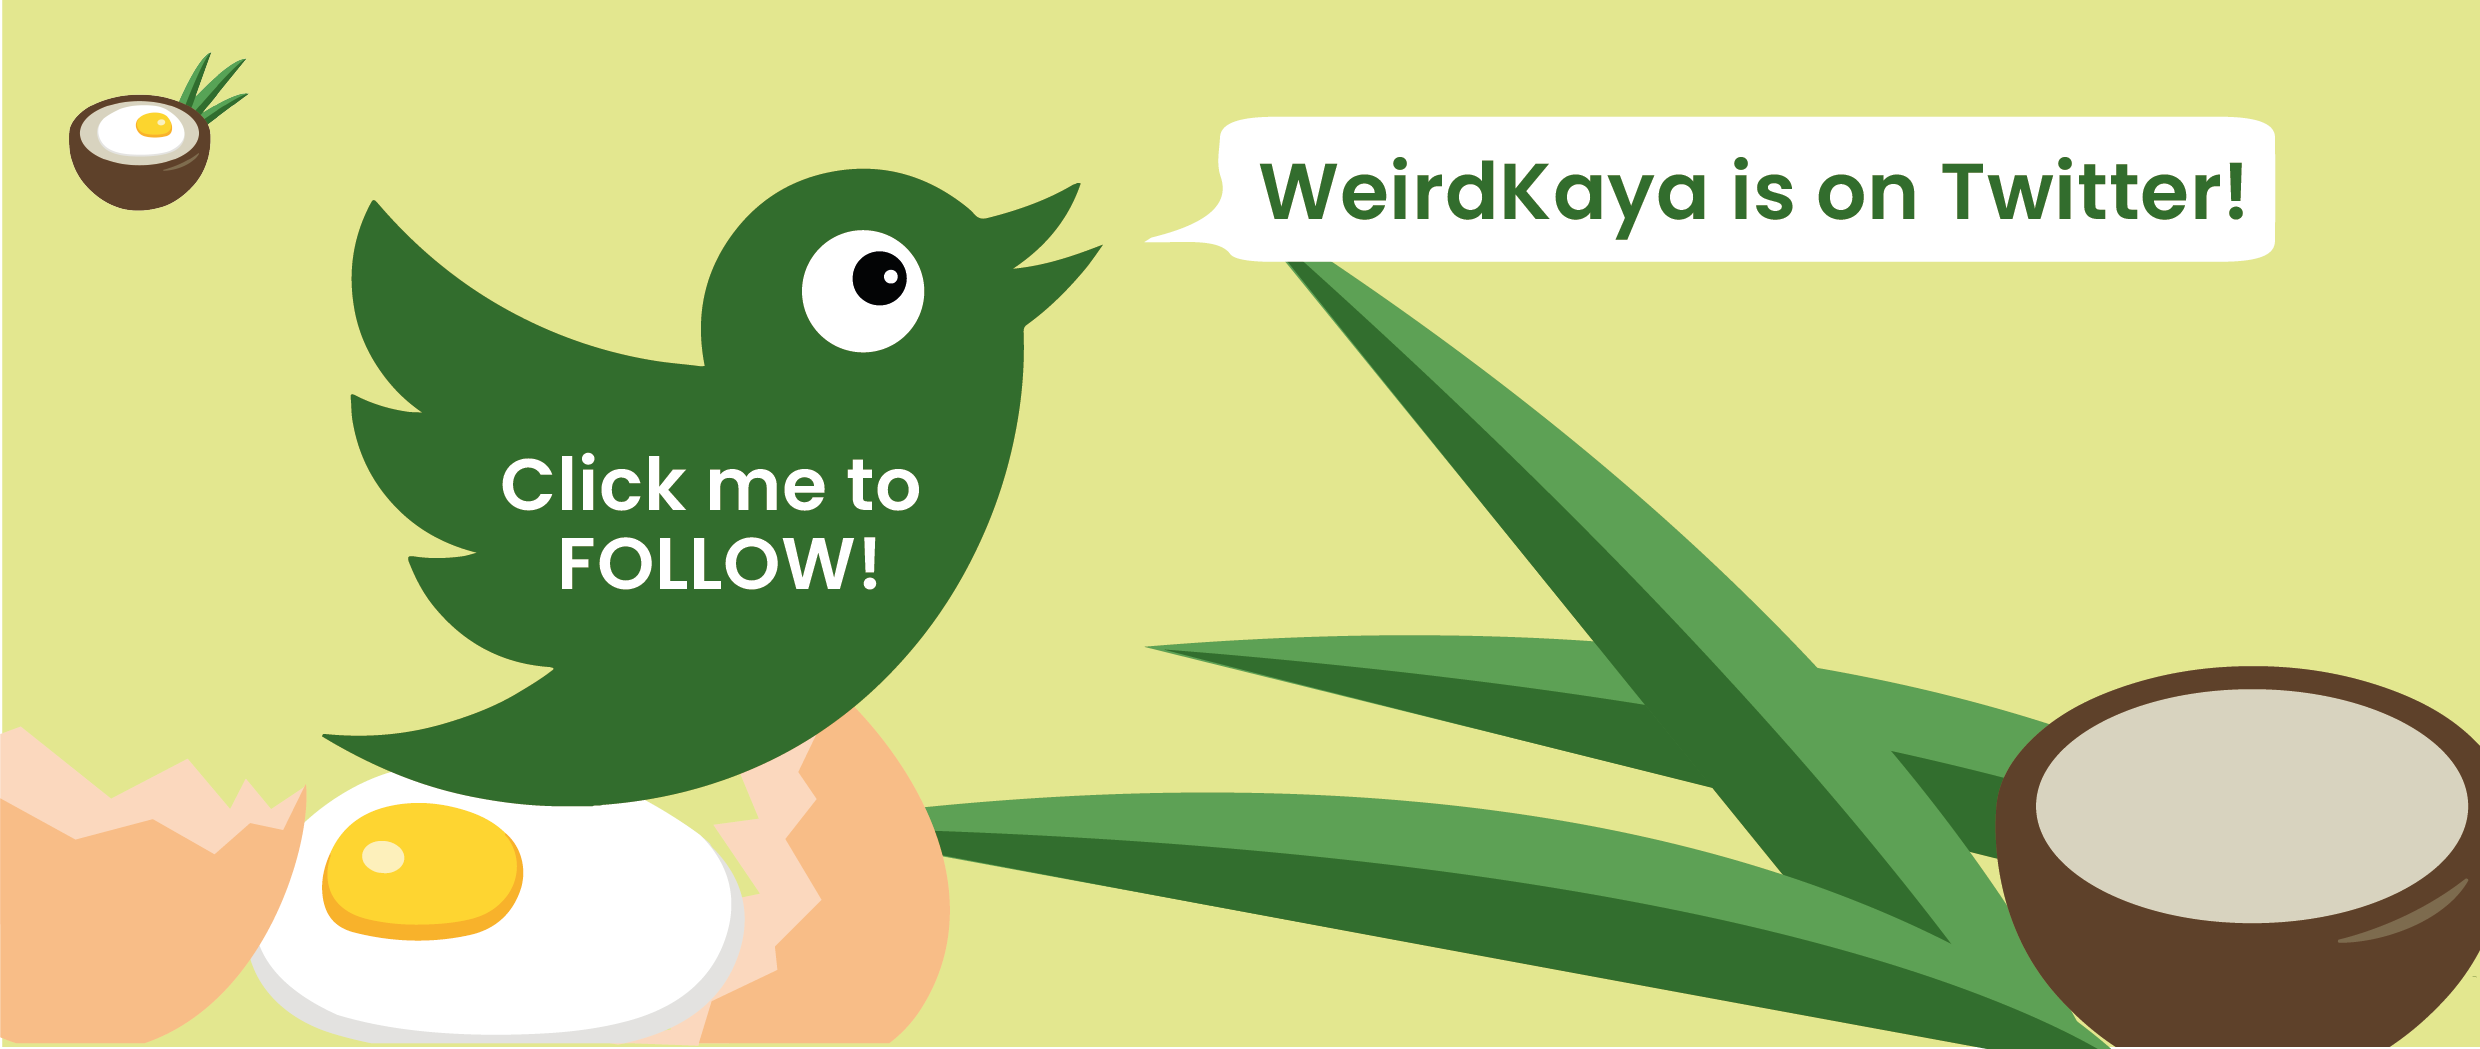 Weirdkaya is on twitter!